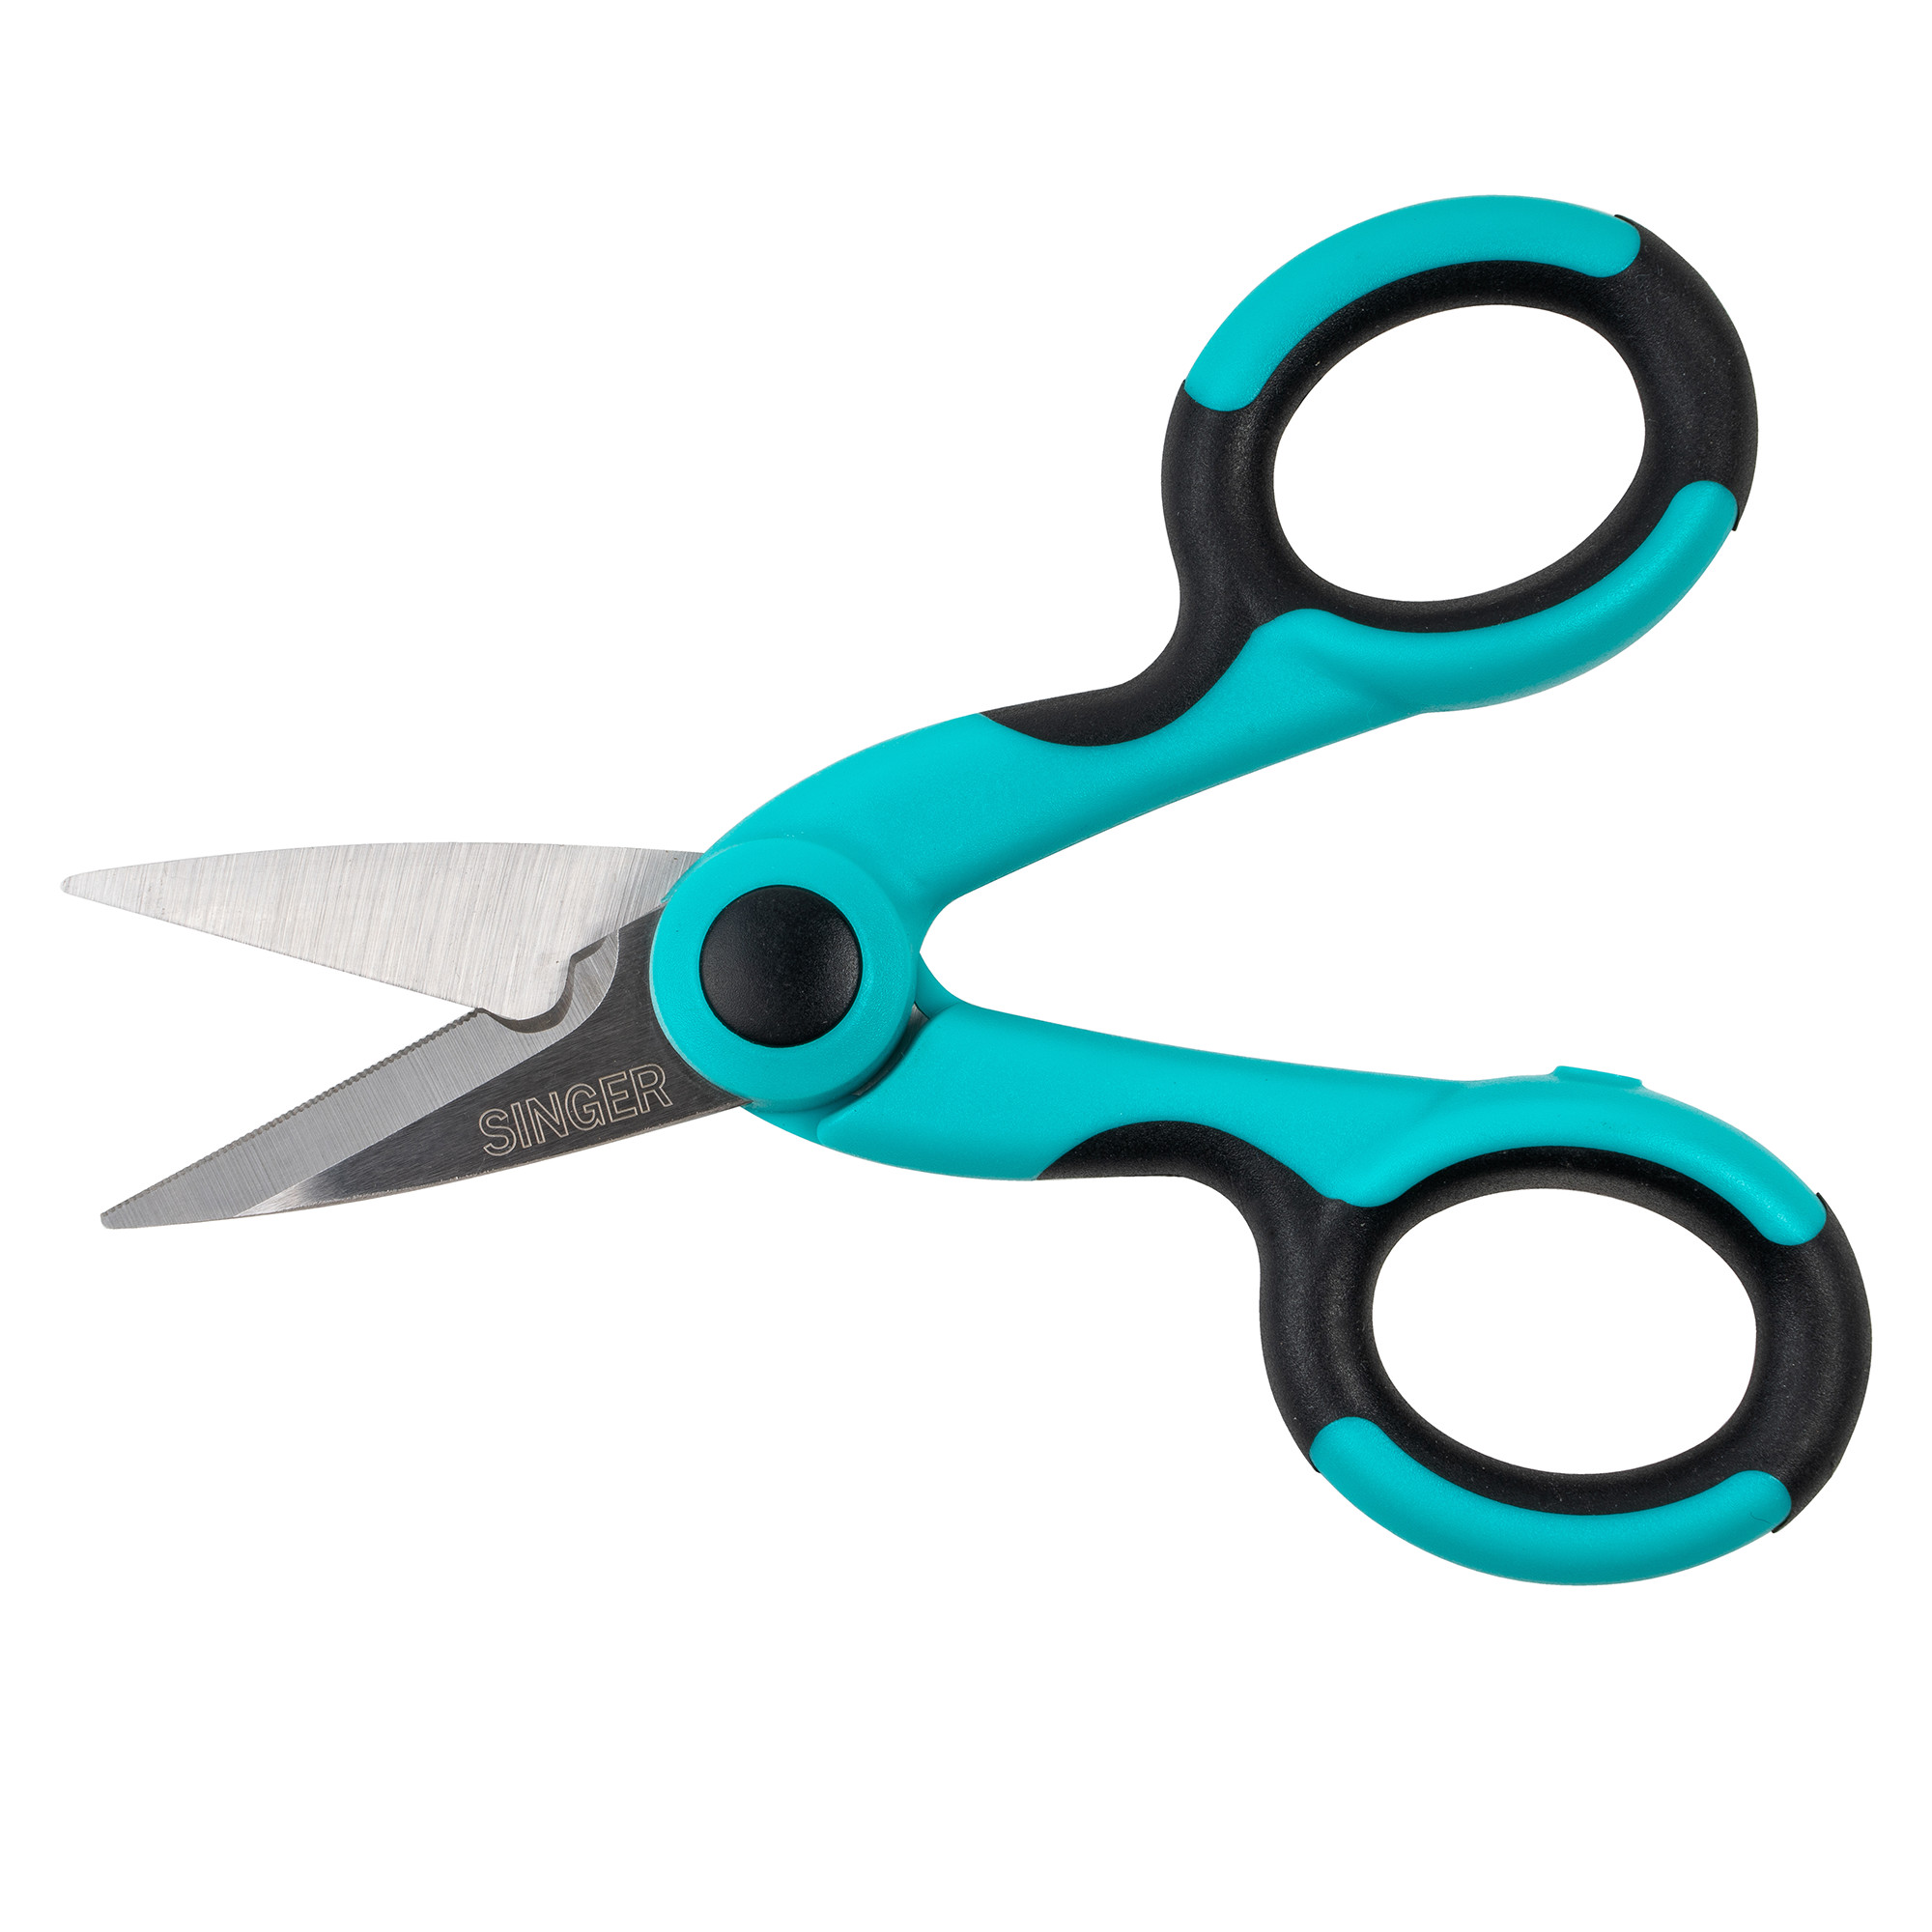 SINGER ProSeries Scissor Set, Heavy Duty Bent 8 1/2" Fabric Scissors, All Purpose 5 1/2" Craft Scissors, 4 1/2" Detail Scissors, Teal, Pack of 3 - image 14 of 19